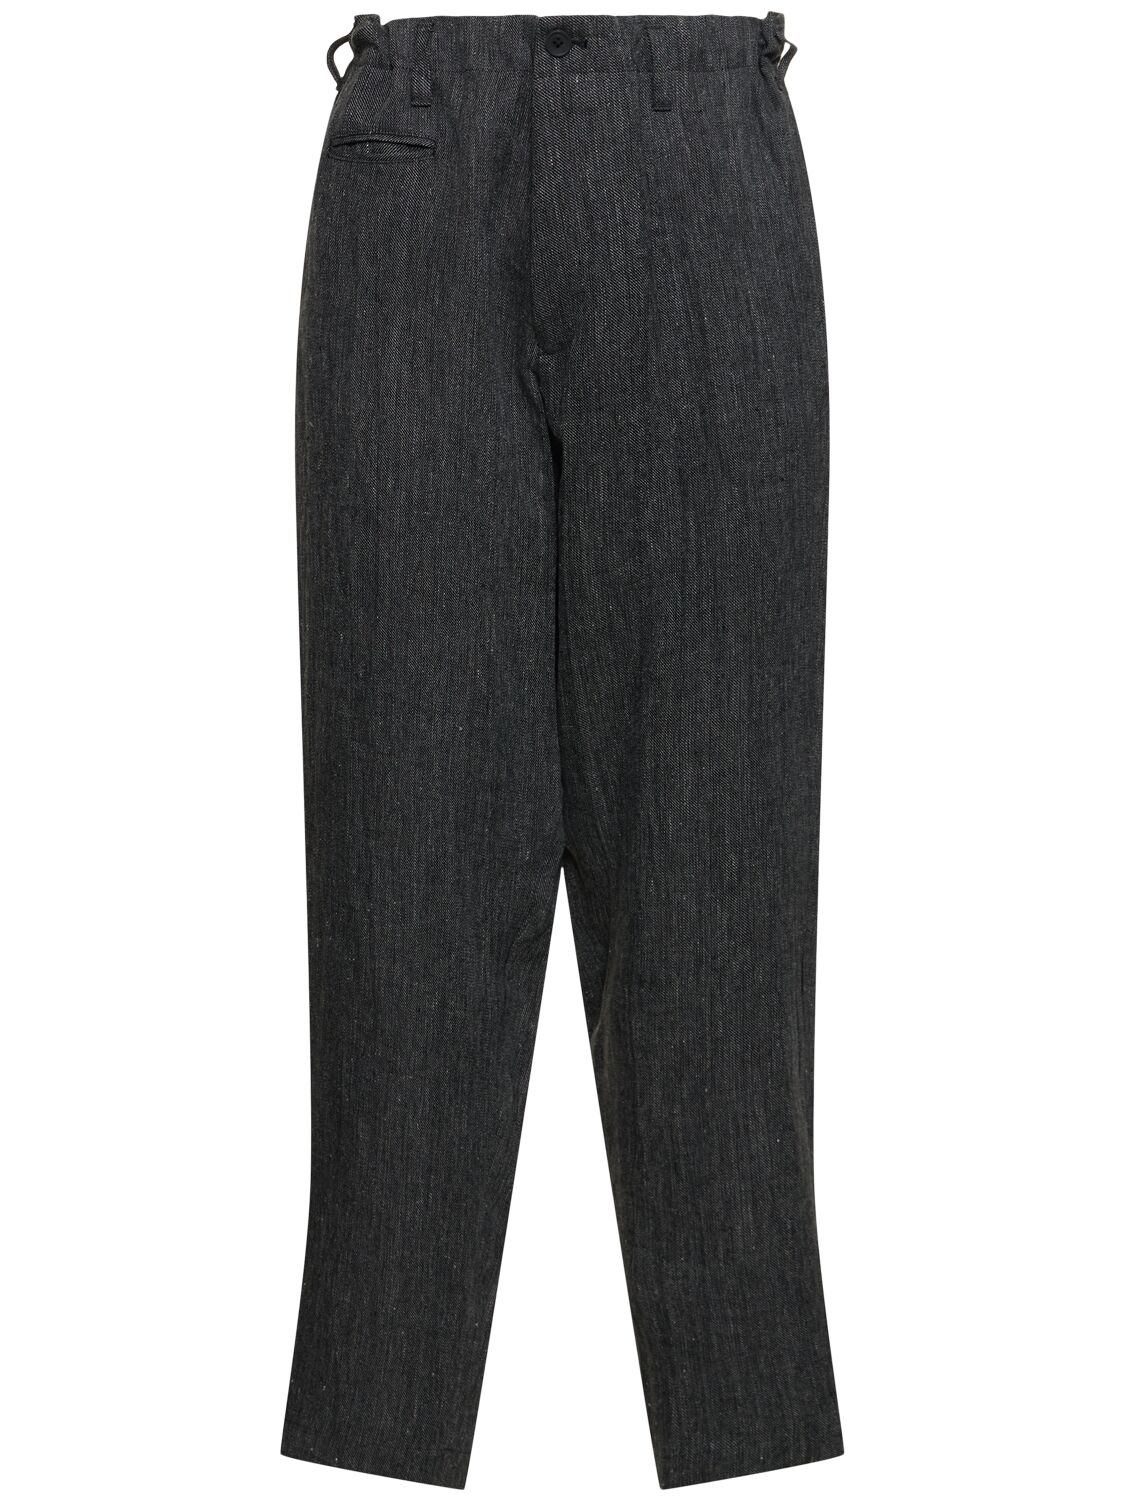 Image of G-coin Pocket Slim Linen Pants